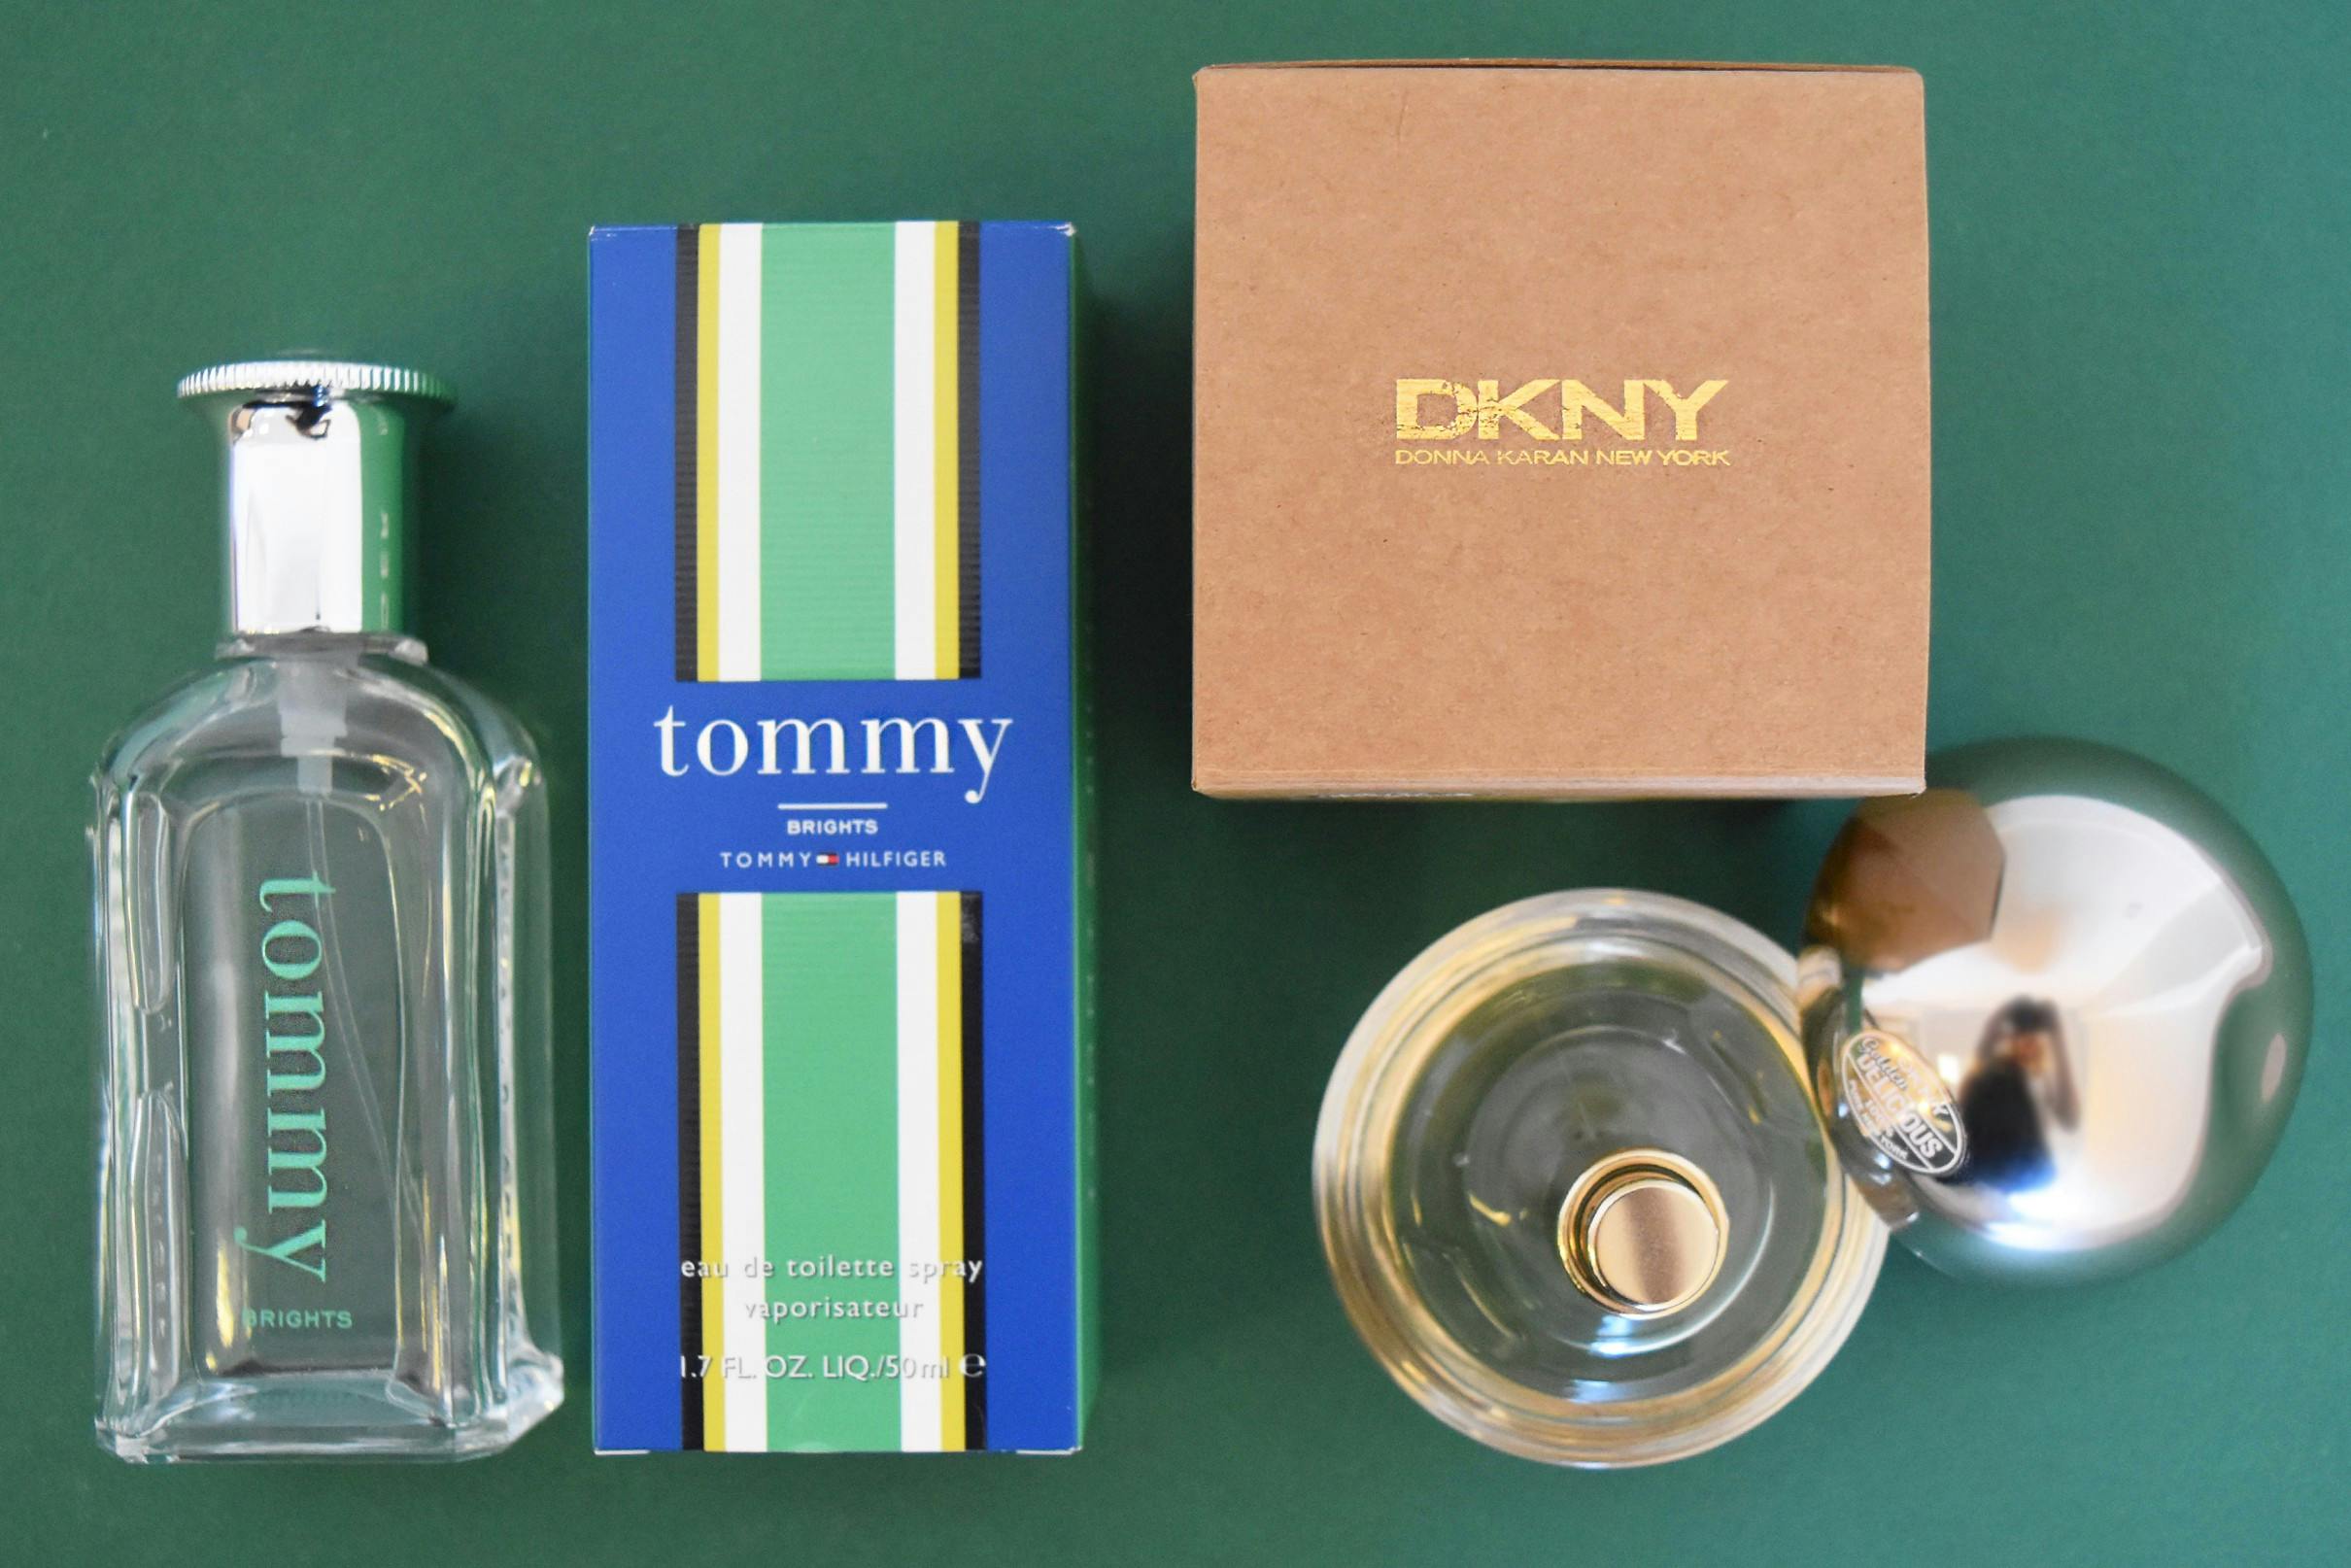 Billiga parfymer Luxplus Tommy Brights Tommy Hilfiger och DKNY Golden Delicious